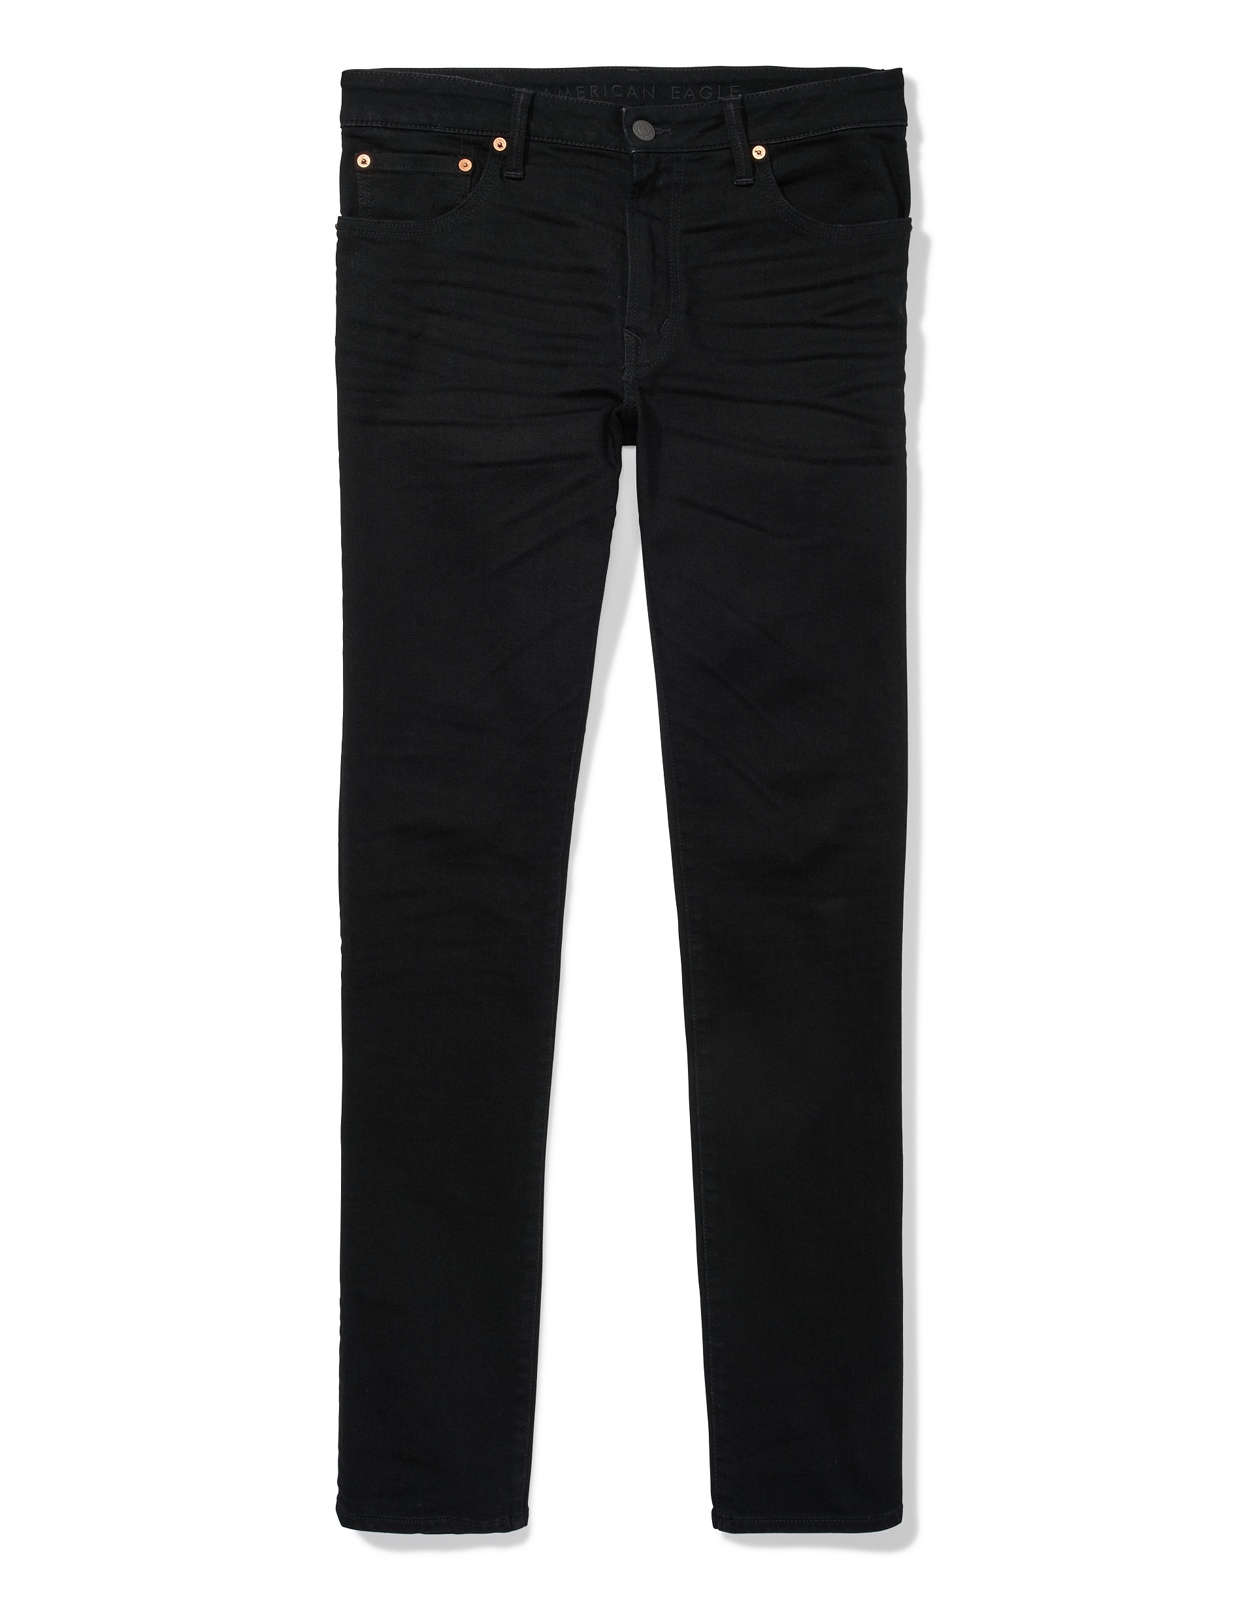 American Eagle AE AirFlex+ Slim jeans black - 1 of 3